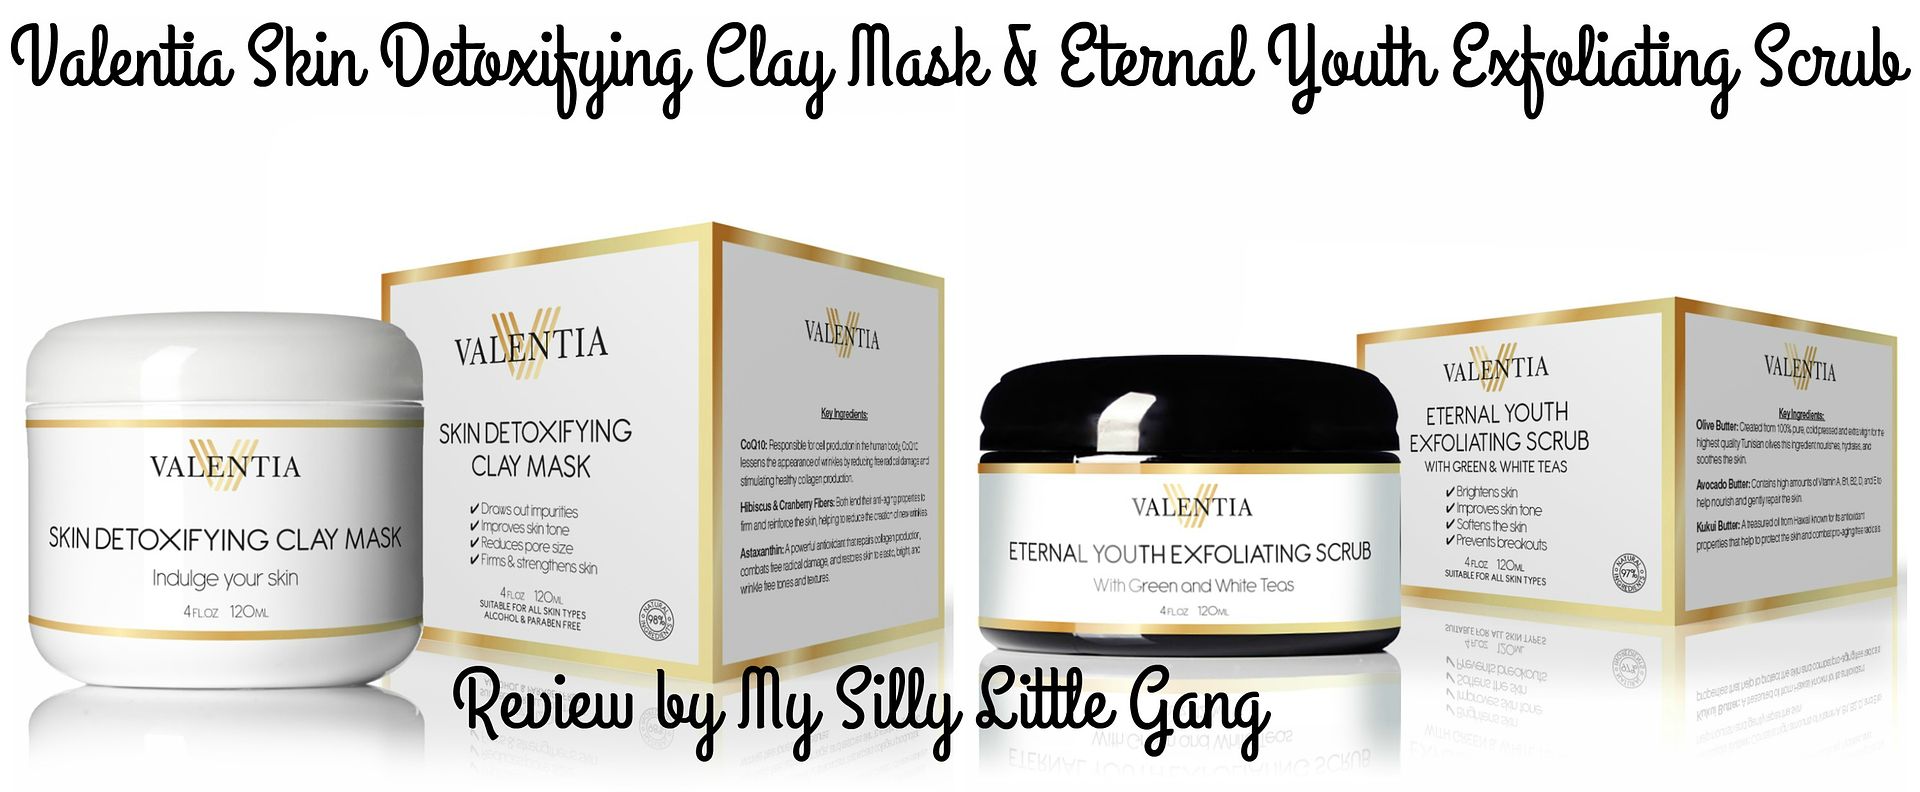 valentia detoxifying clay mask and exfoliating scrub